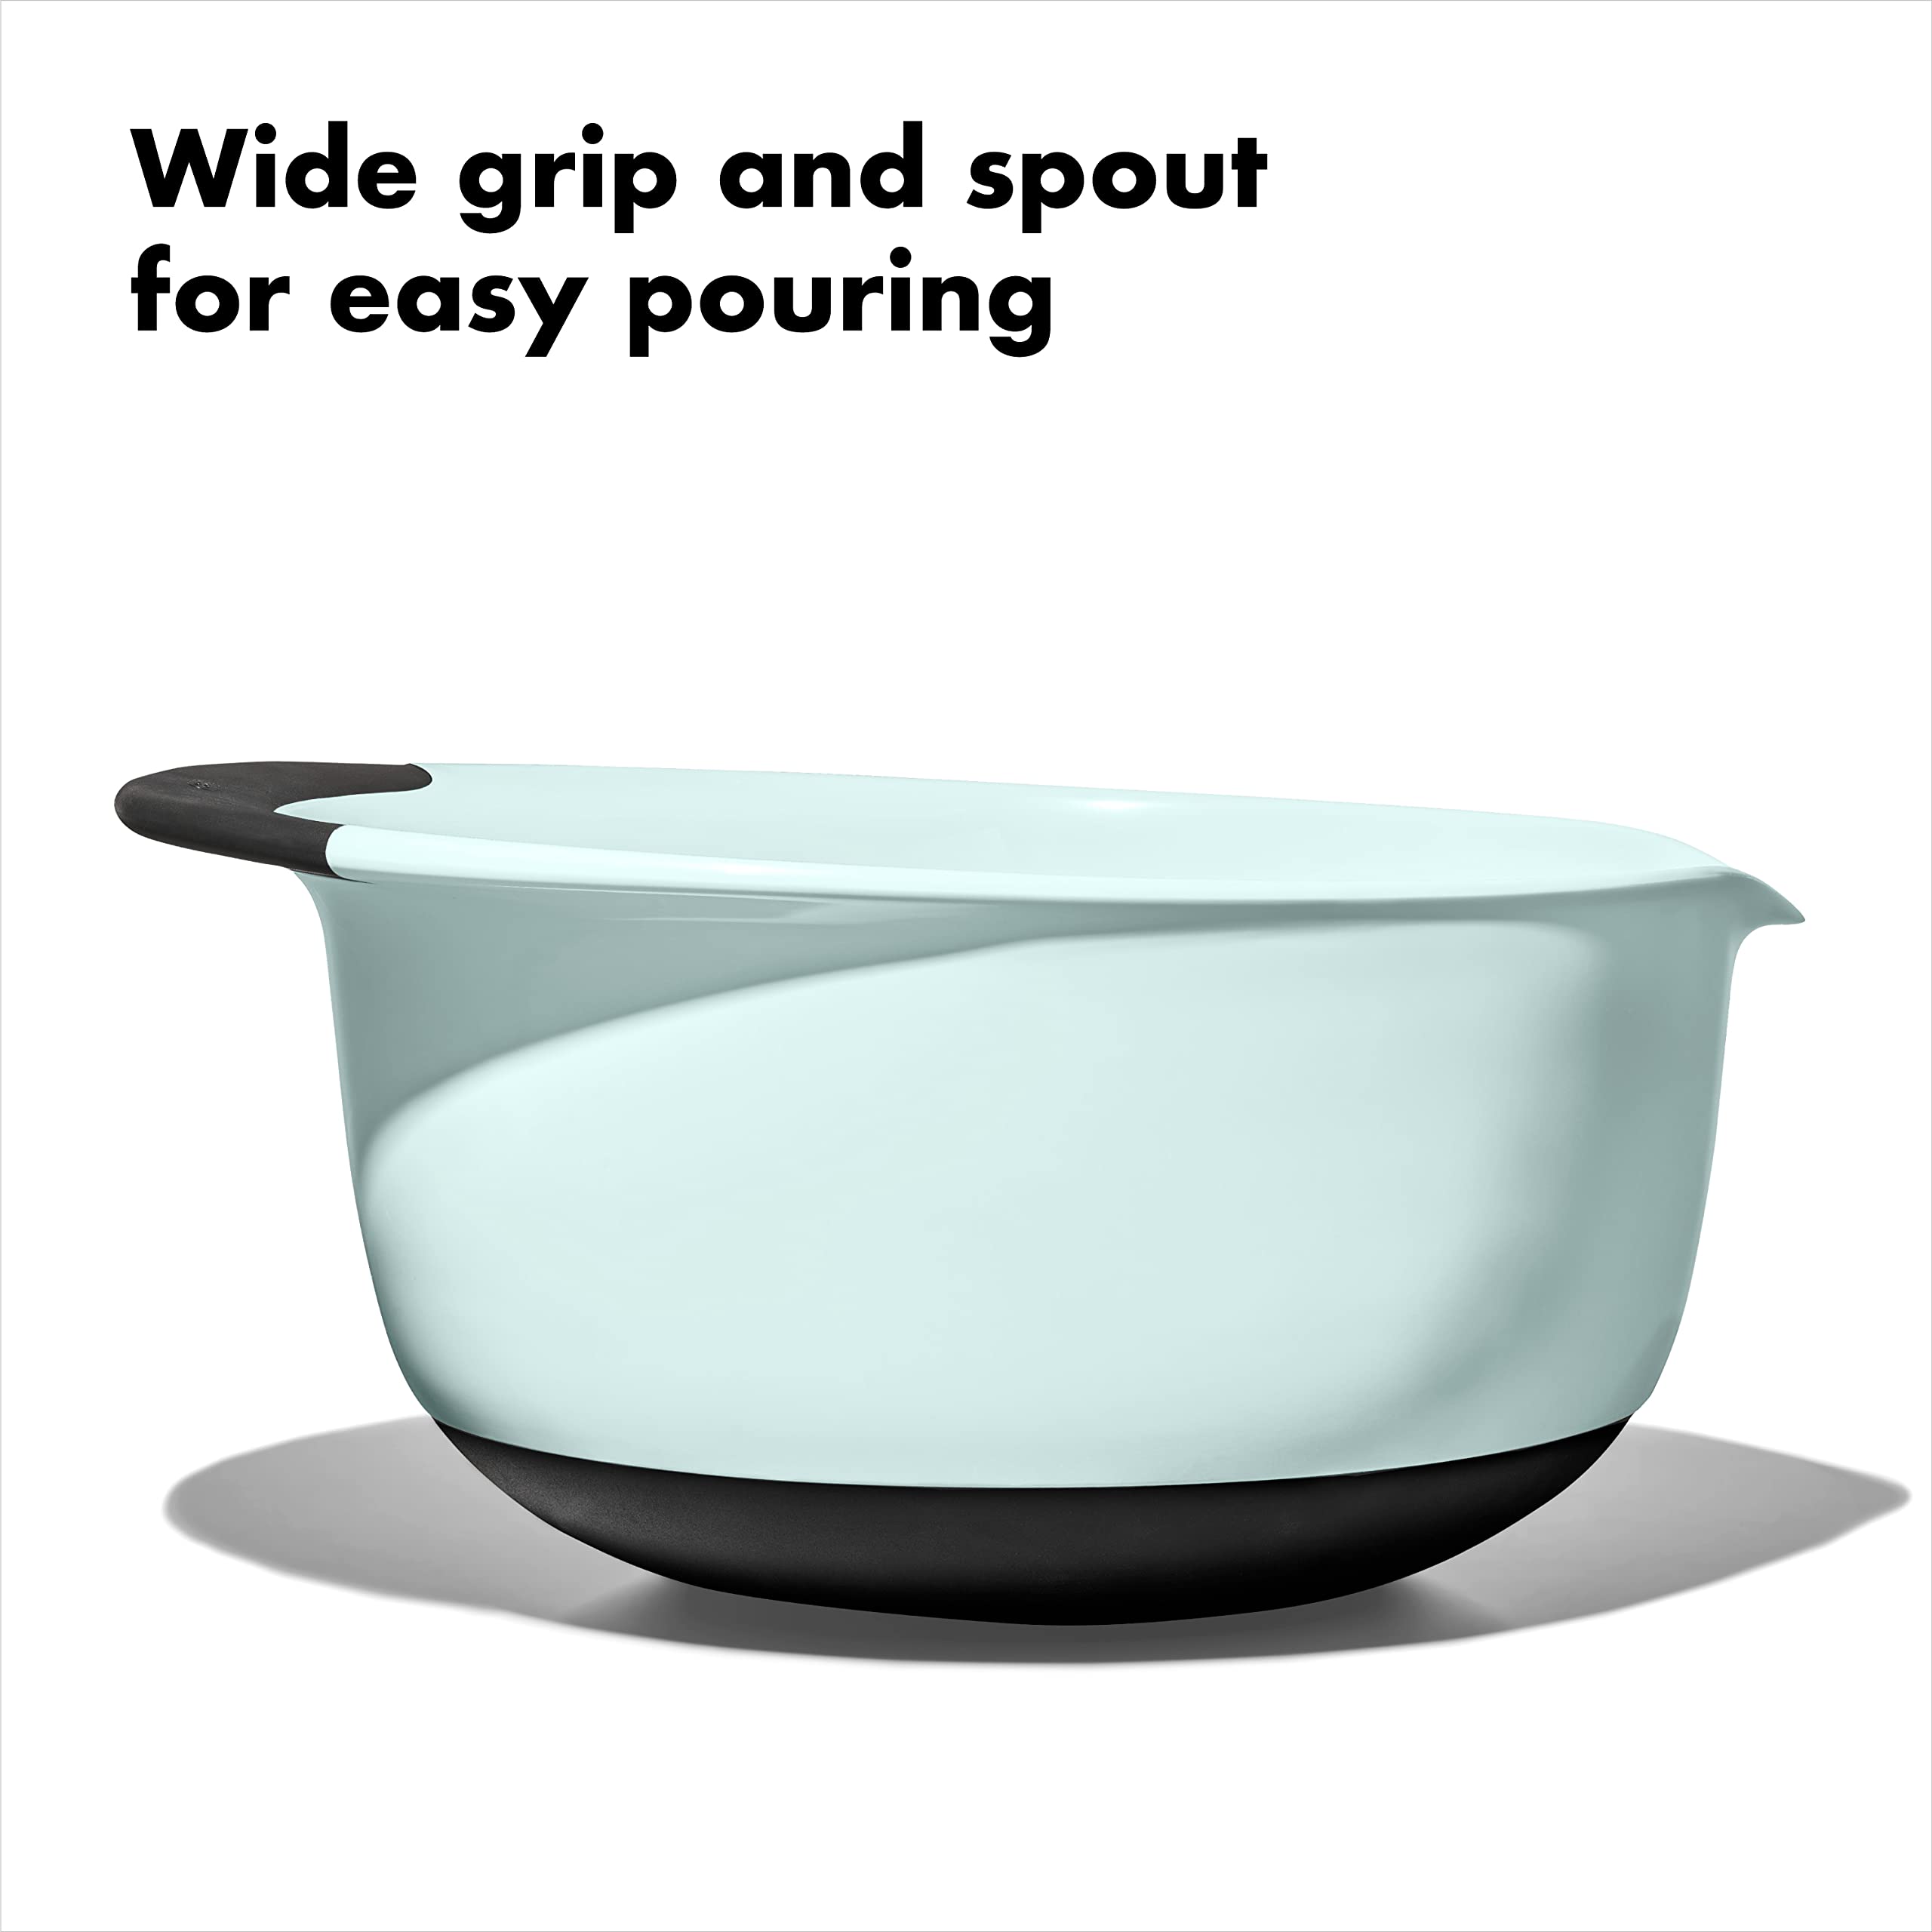 OXO Good Grips 3-Piece Plastic Mixing Bowl Set - Cadet Blue, Tower Gray, Jade, Small, Medium, Large